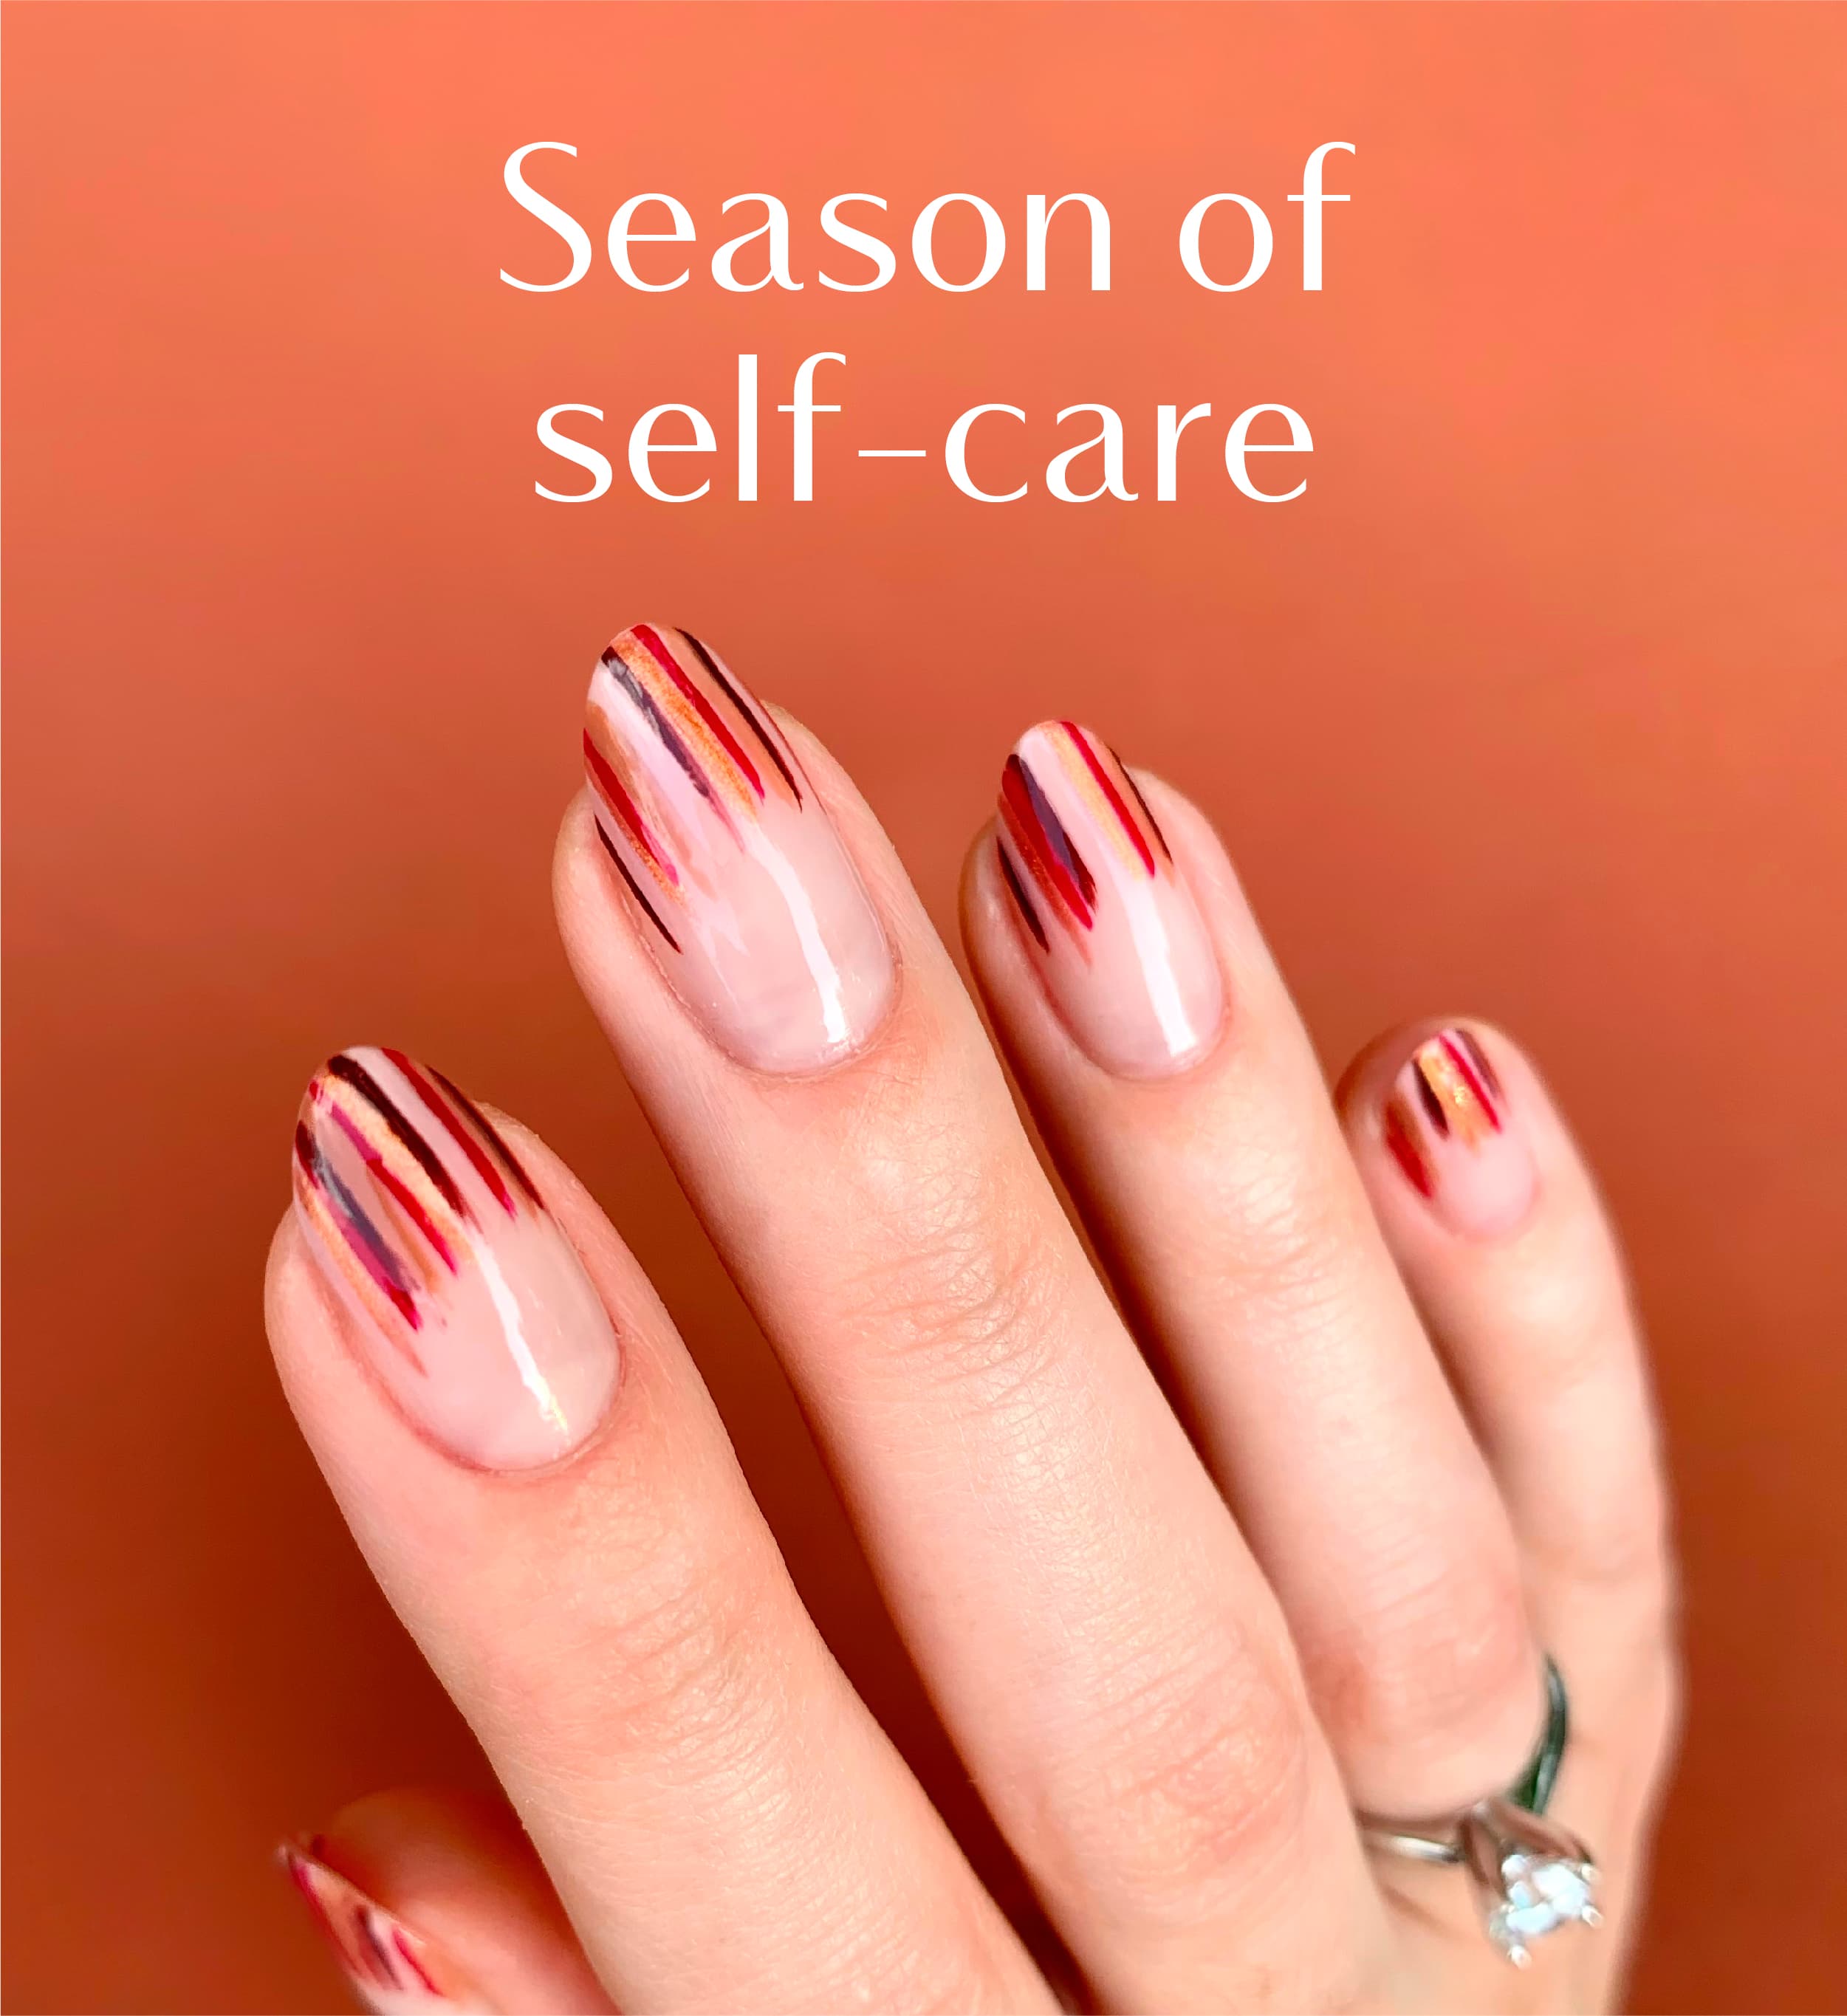 Season of self-care